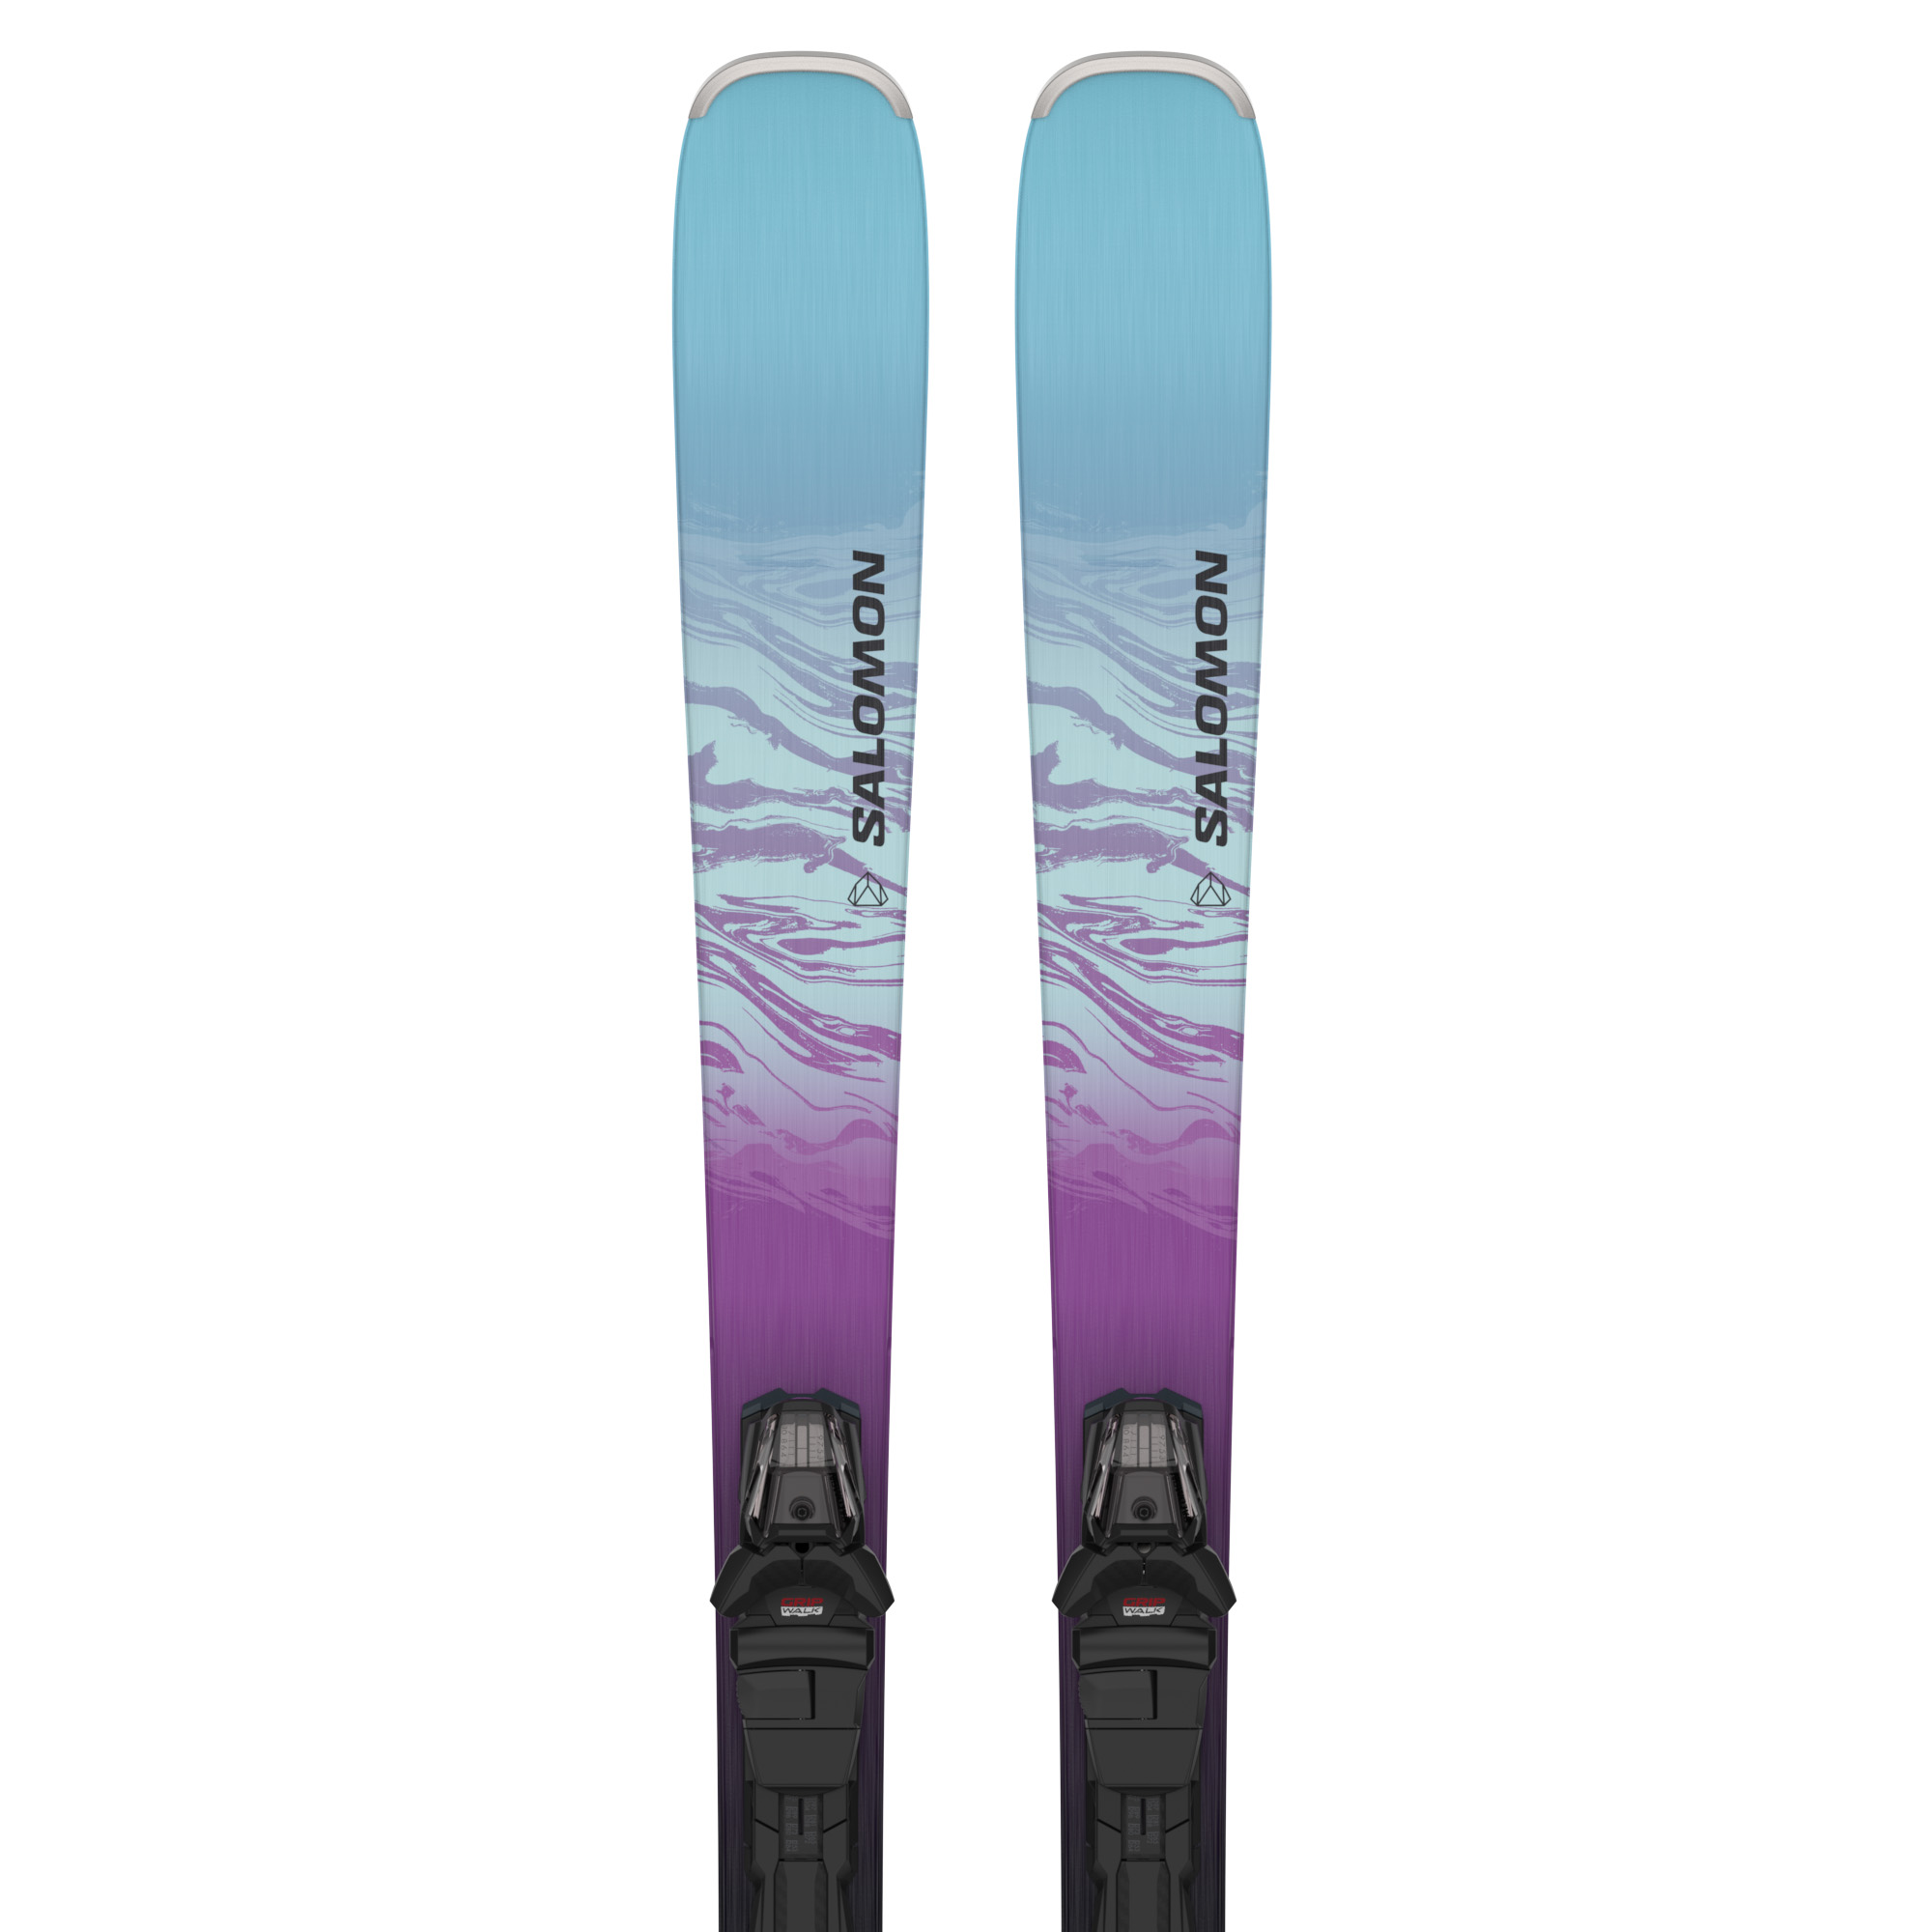 Compre Botas De Esquí De Snowboard Impermeables Al Aire Libre, Bolsa De  Equipo De Esquí, Mochila De Viaje Para Casco De Esquí y Bolso Deportivo de  China por 14.83 USD